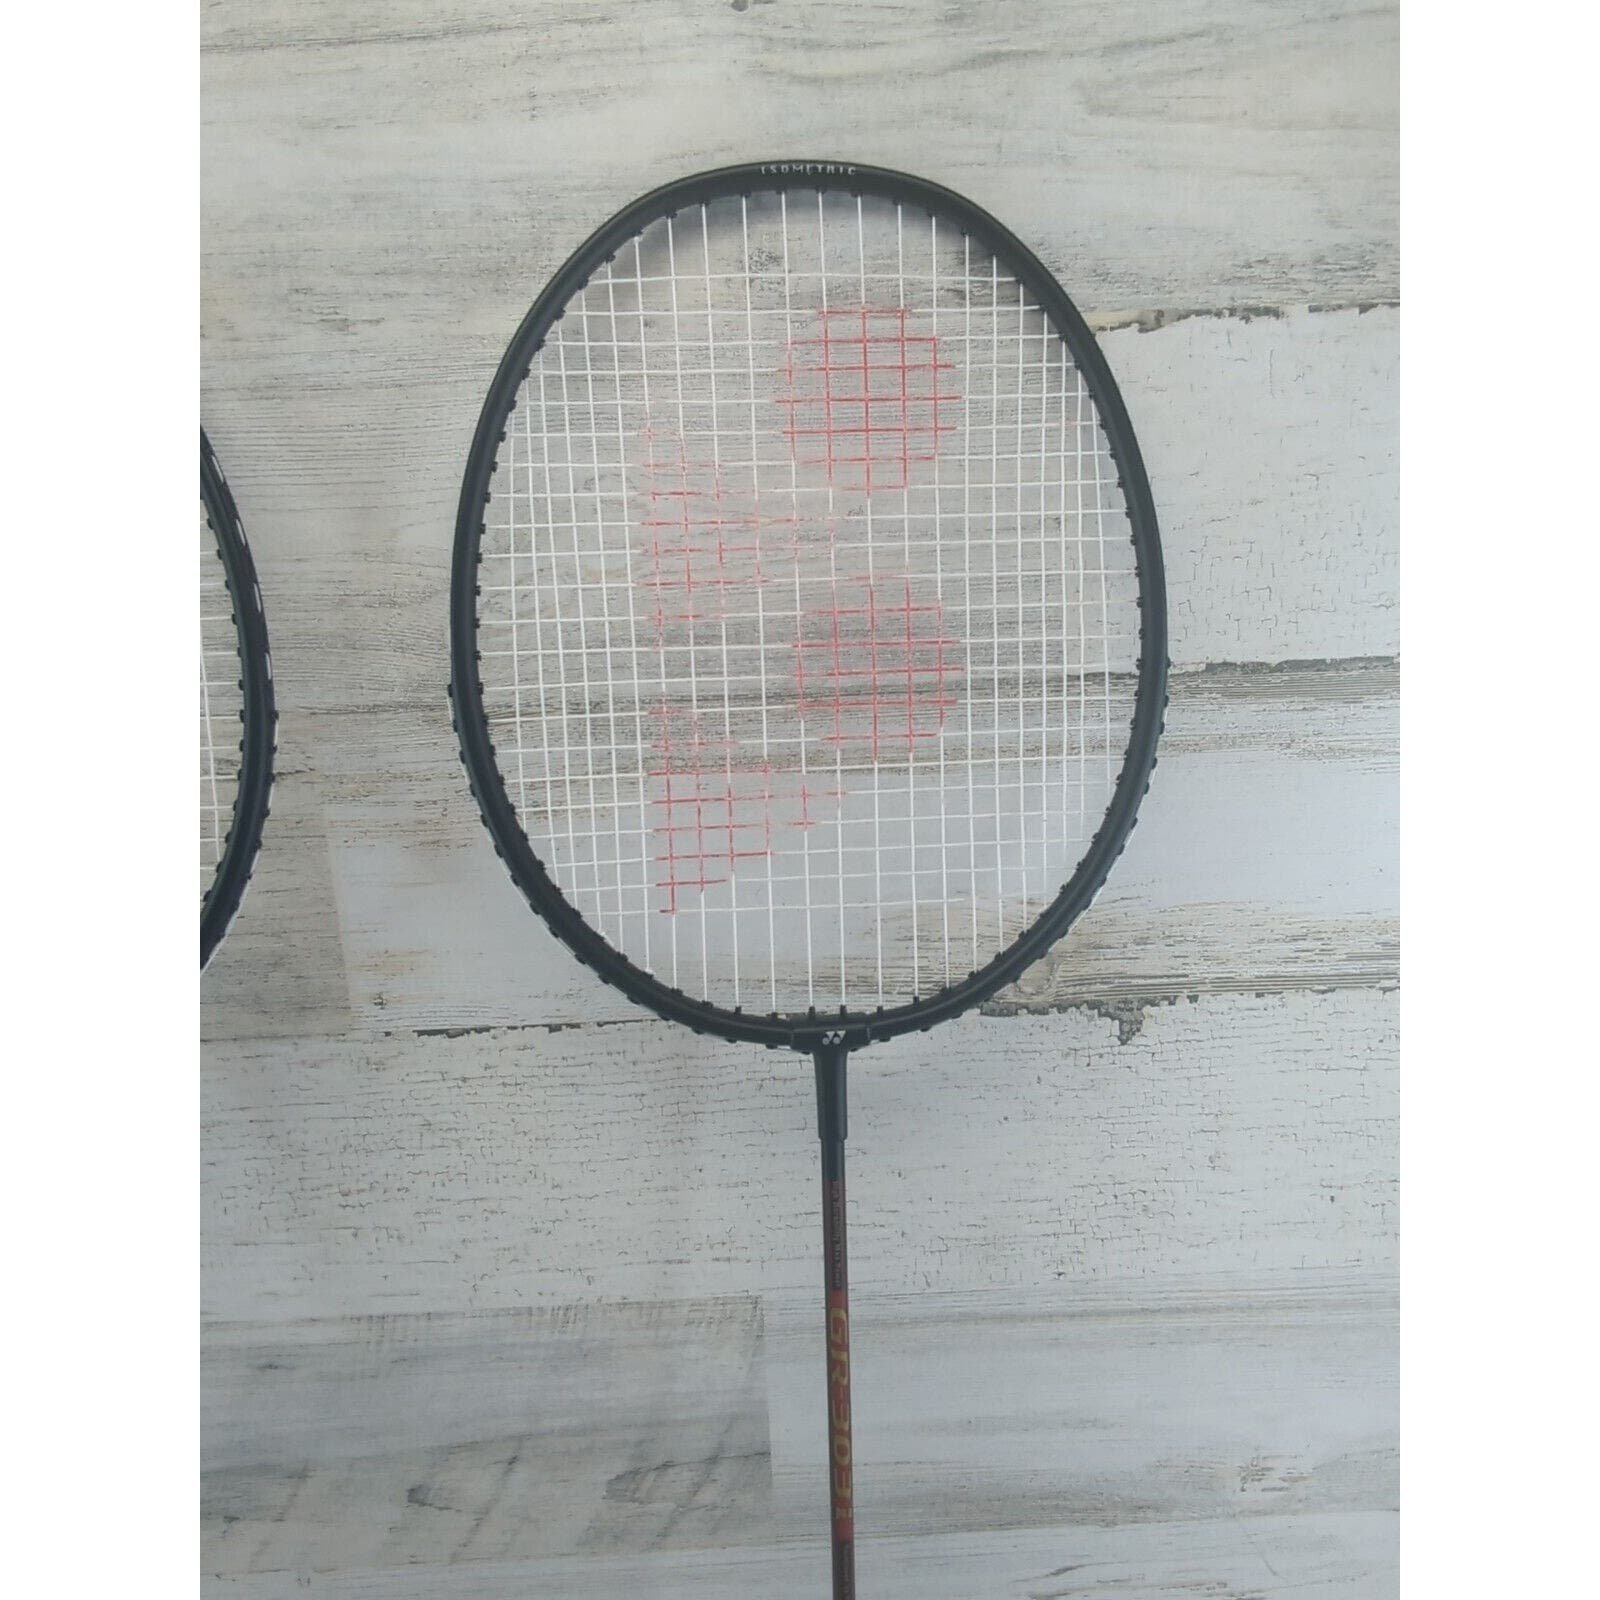 YONEX GR 303i Combo Badminton Racquet with Full Cover, Set of 2 Black gaFYYl2Fk